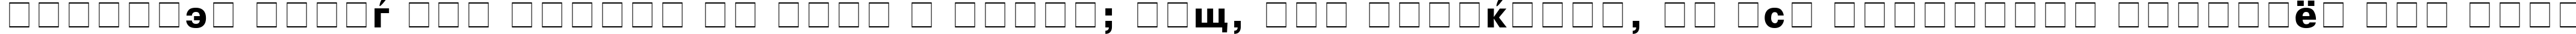 Пример написания шрифтом CyrillicHelv Bold текста на испанском